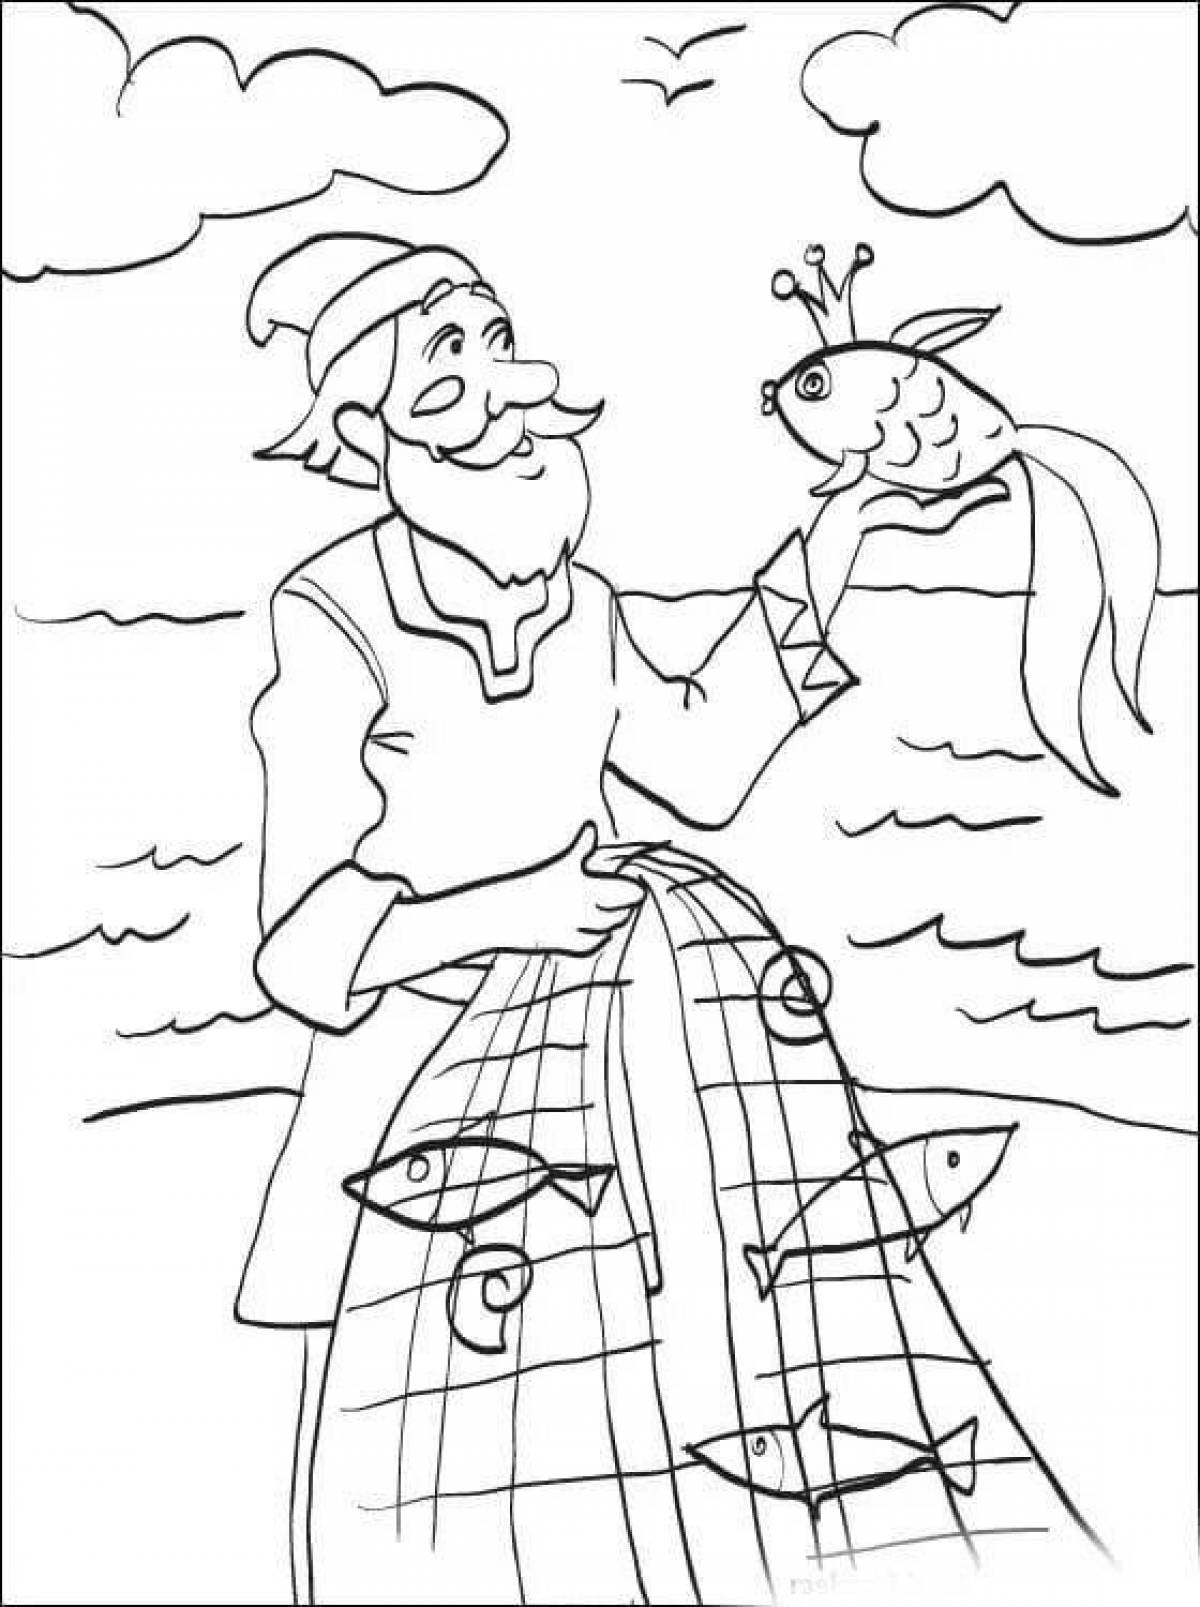 Раскраски по сказке Пушкина о рыбаке и рыбке